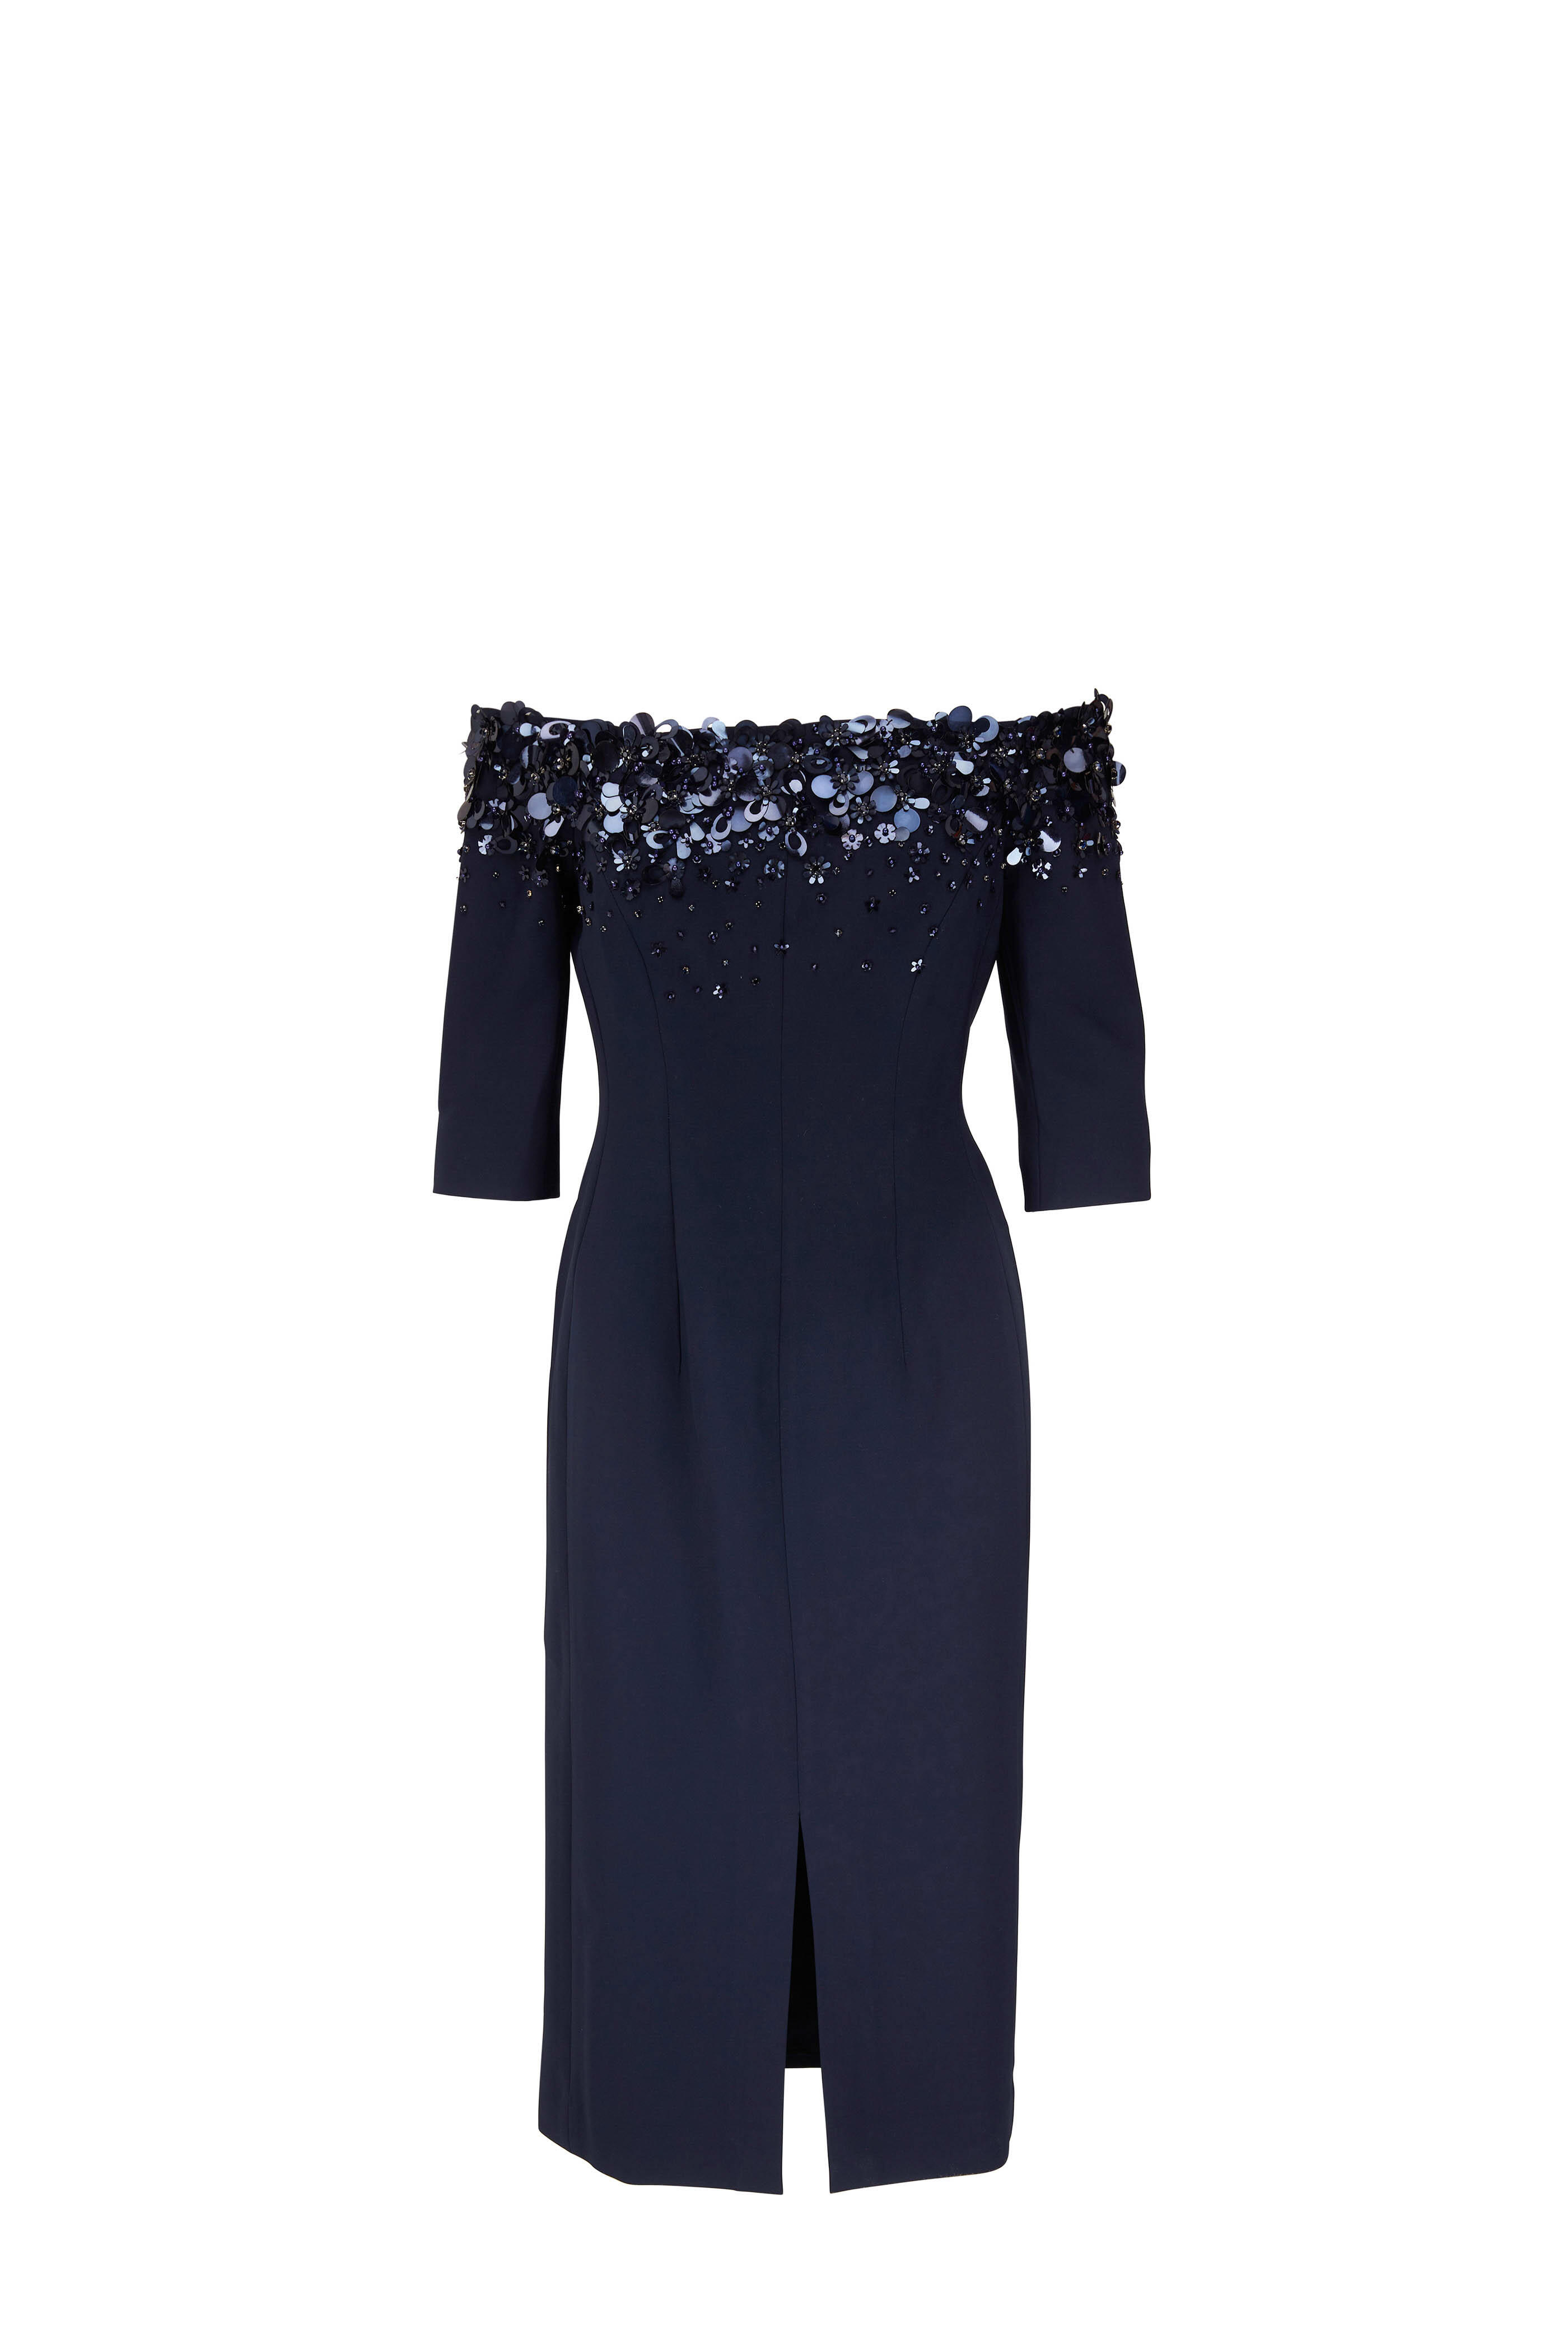 Carolina Herrera - Navy Embellished Off-The-Shoulder Midi Dress